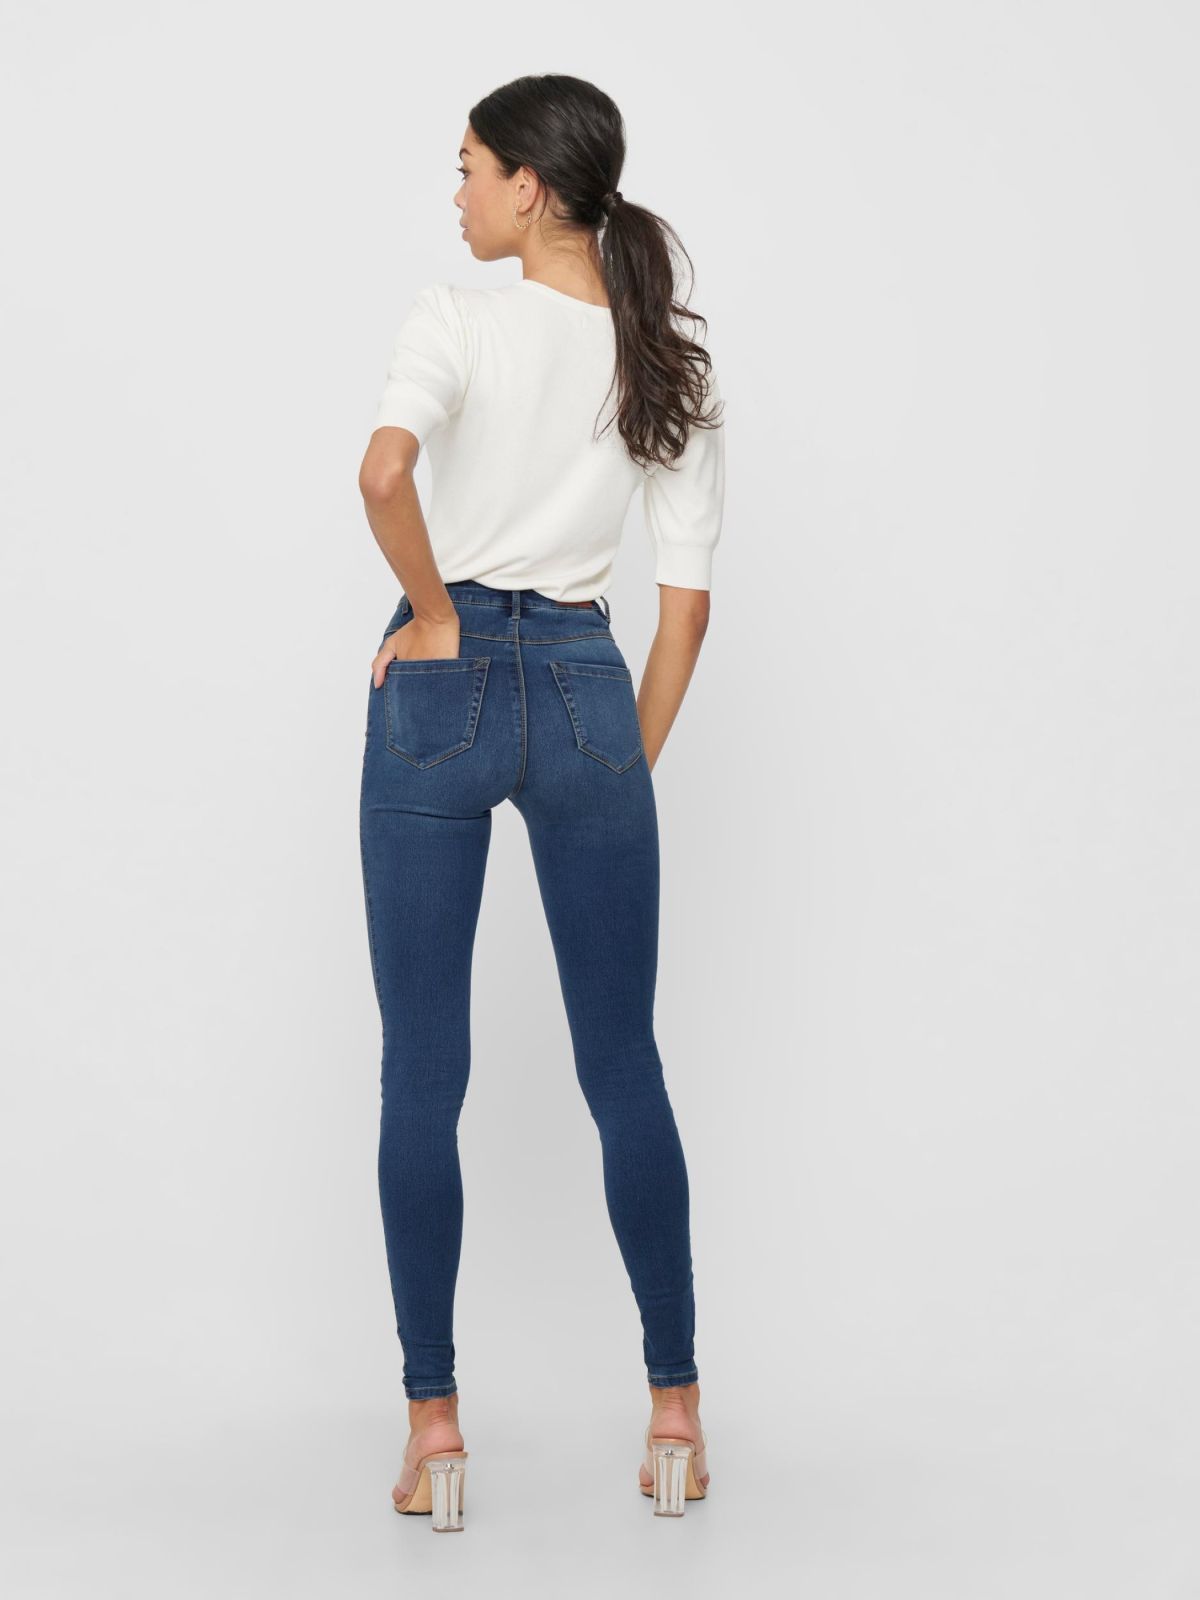  ג'ינס ארוך בגזרת סקיני של ONLY